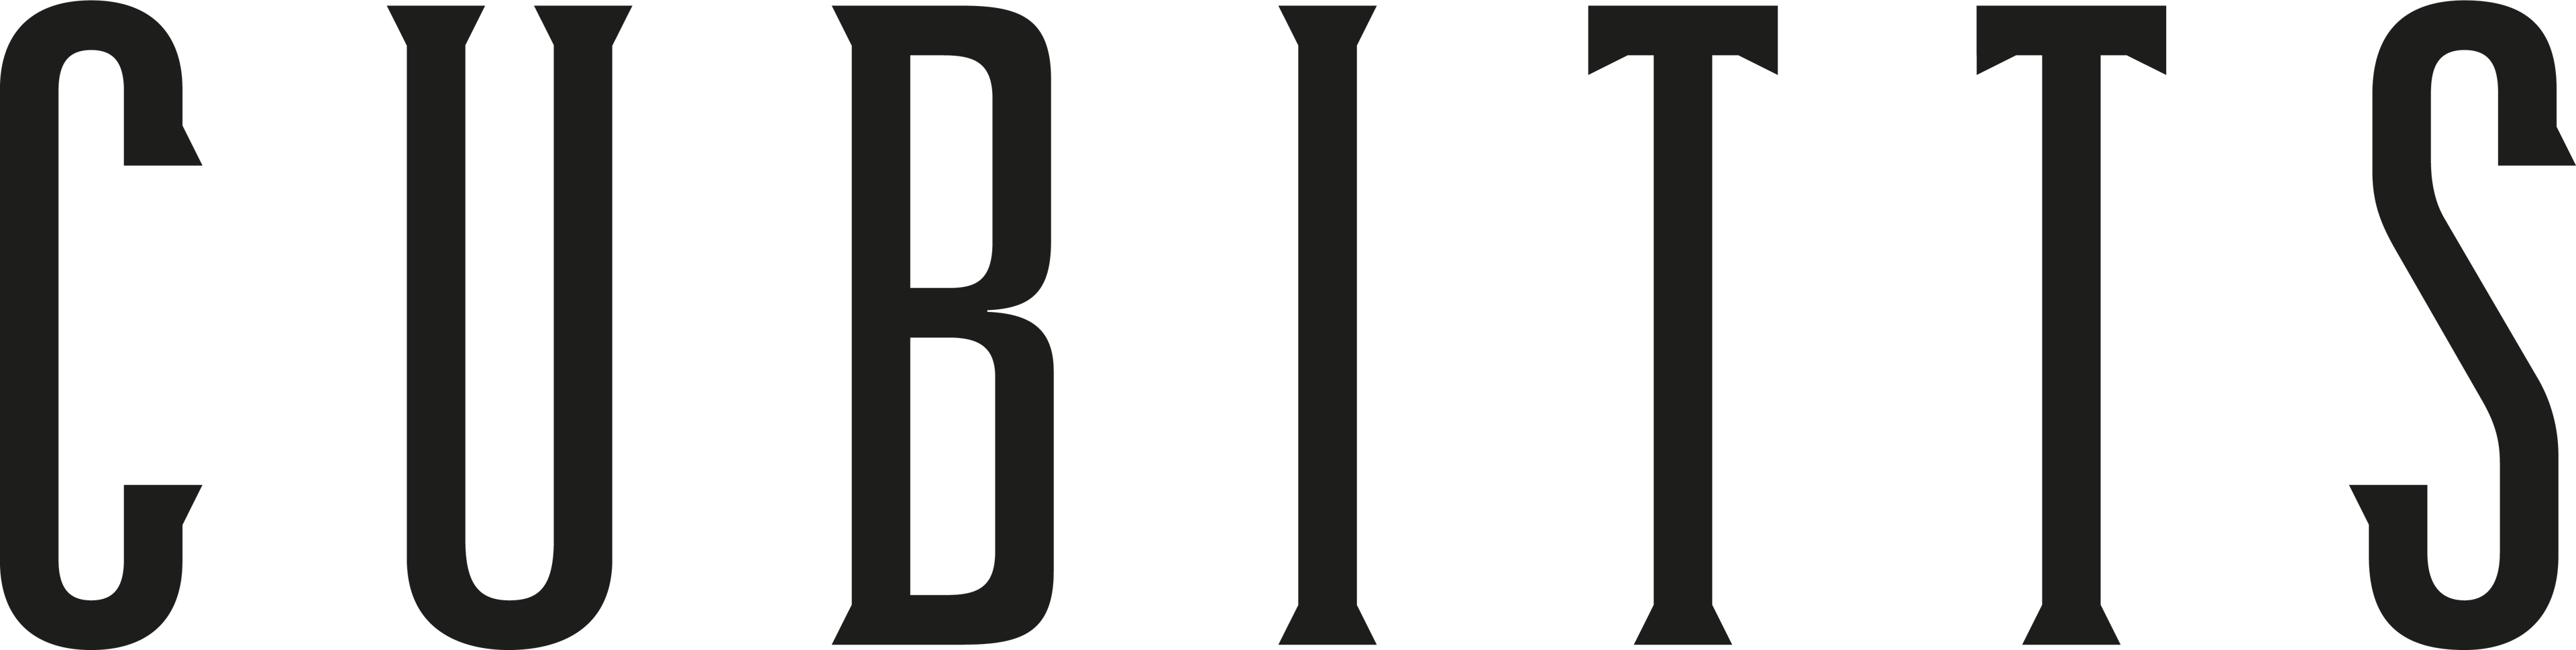 Cubitts logo